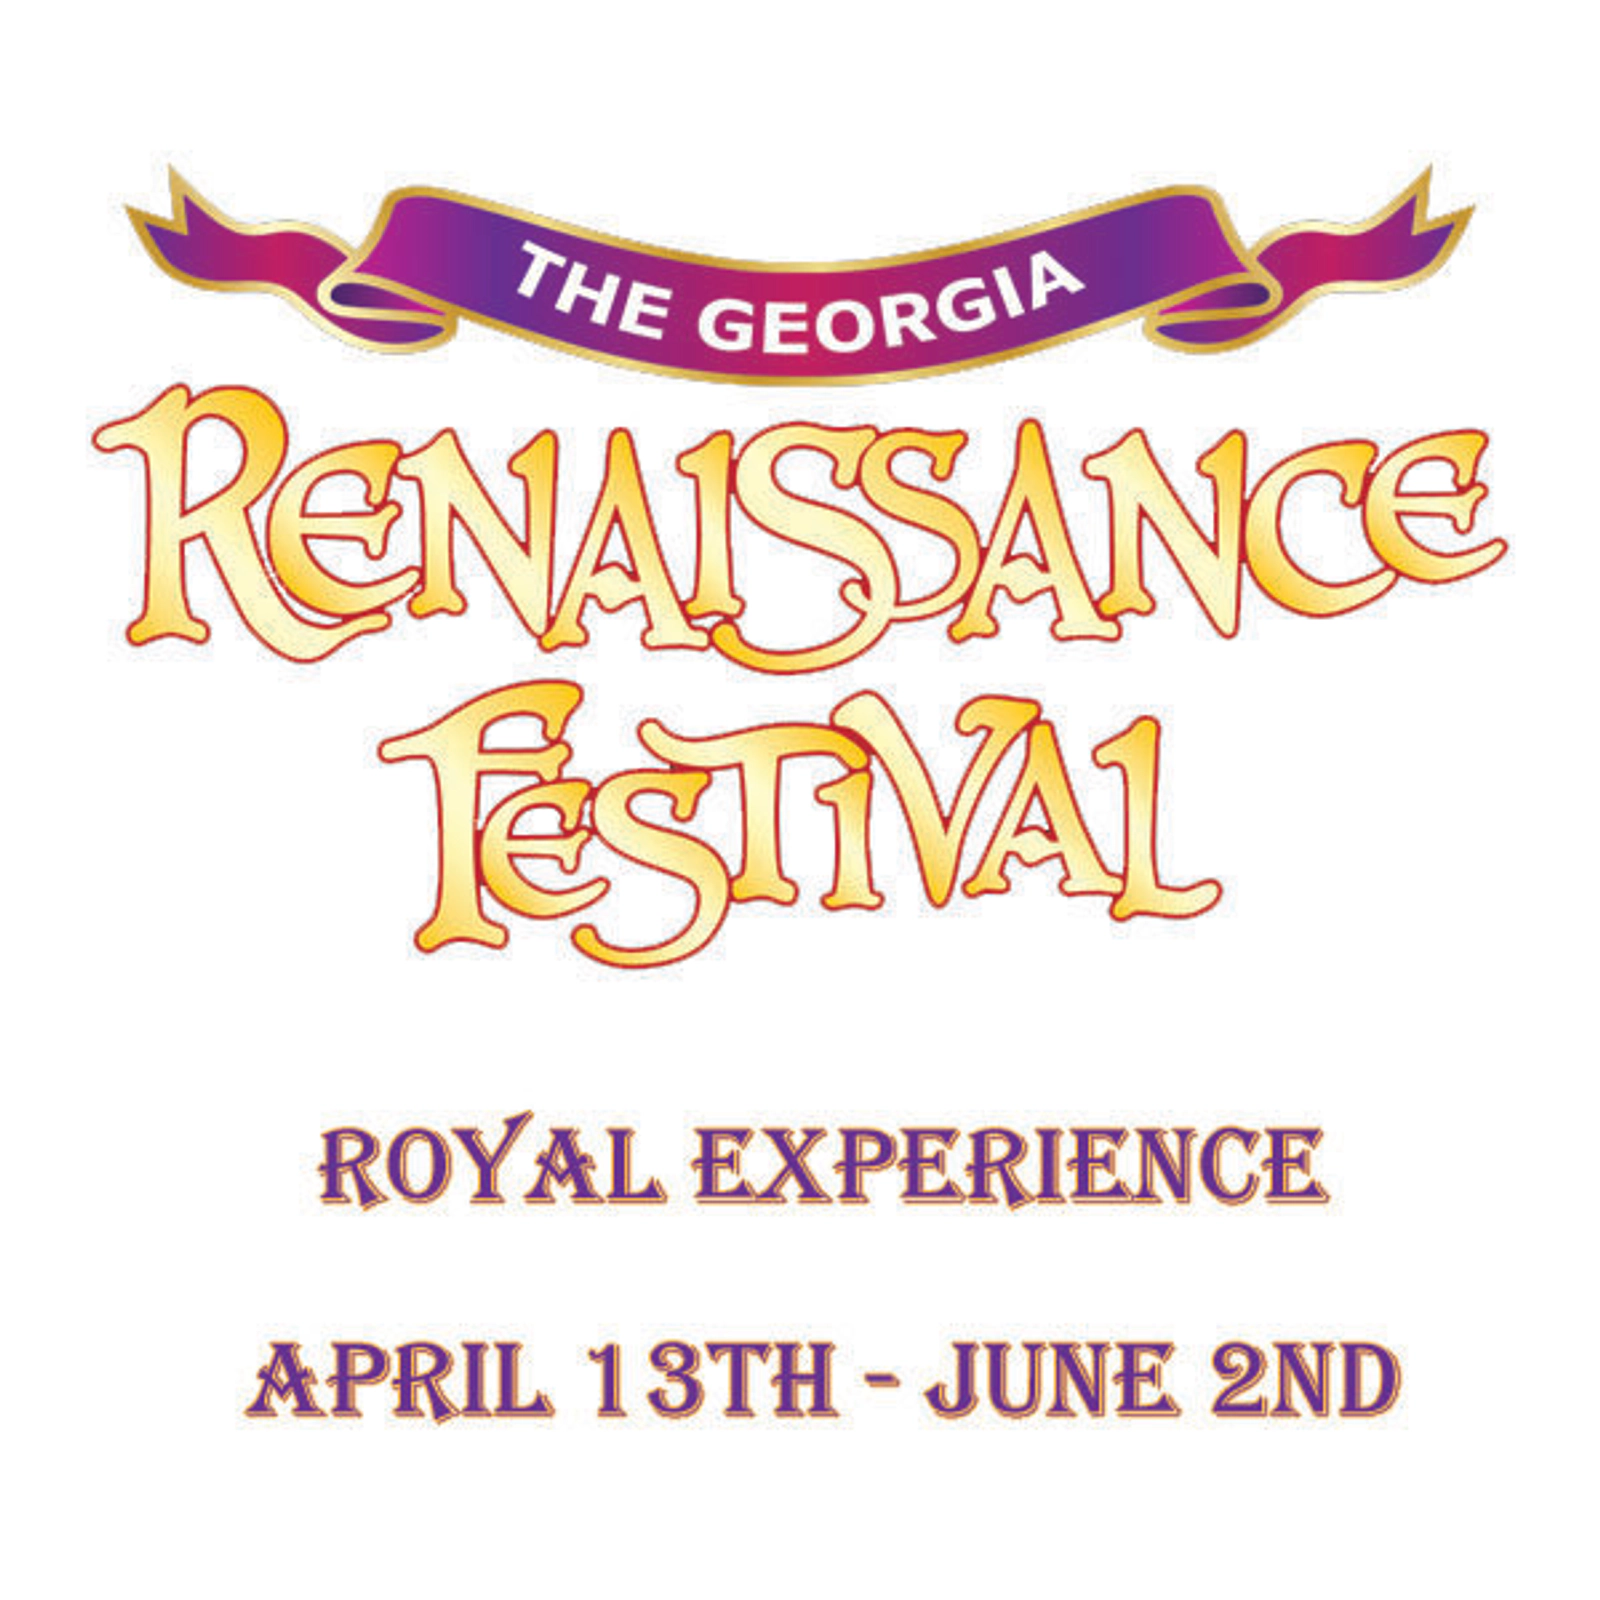 The Georgia Renaissance Festival Royal Experience